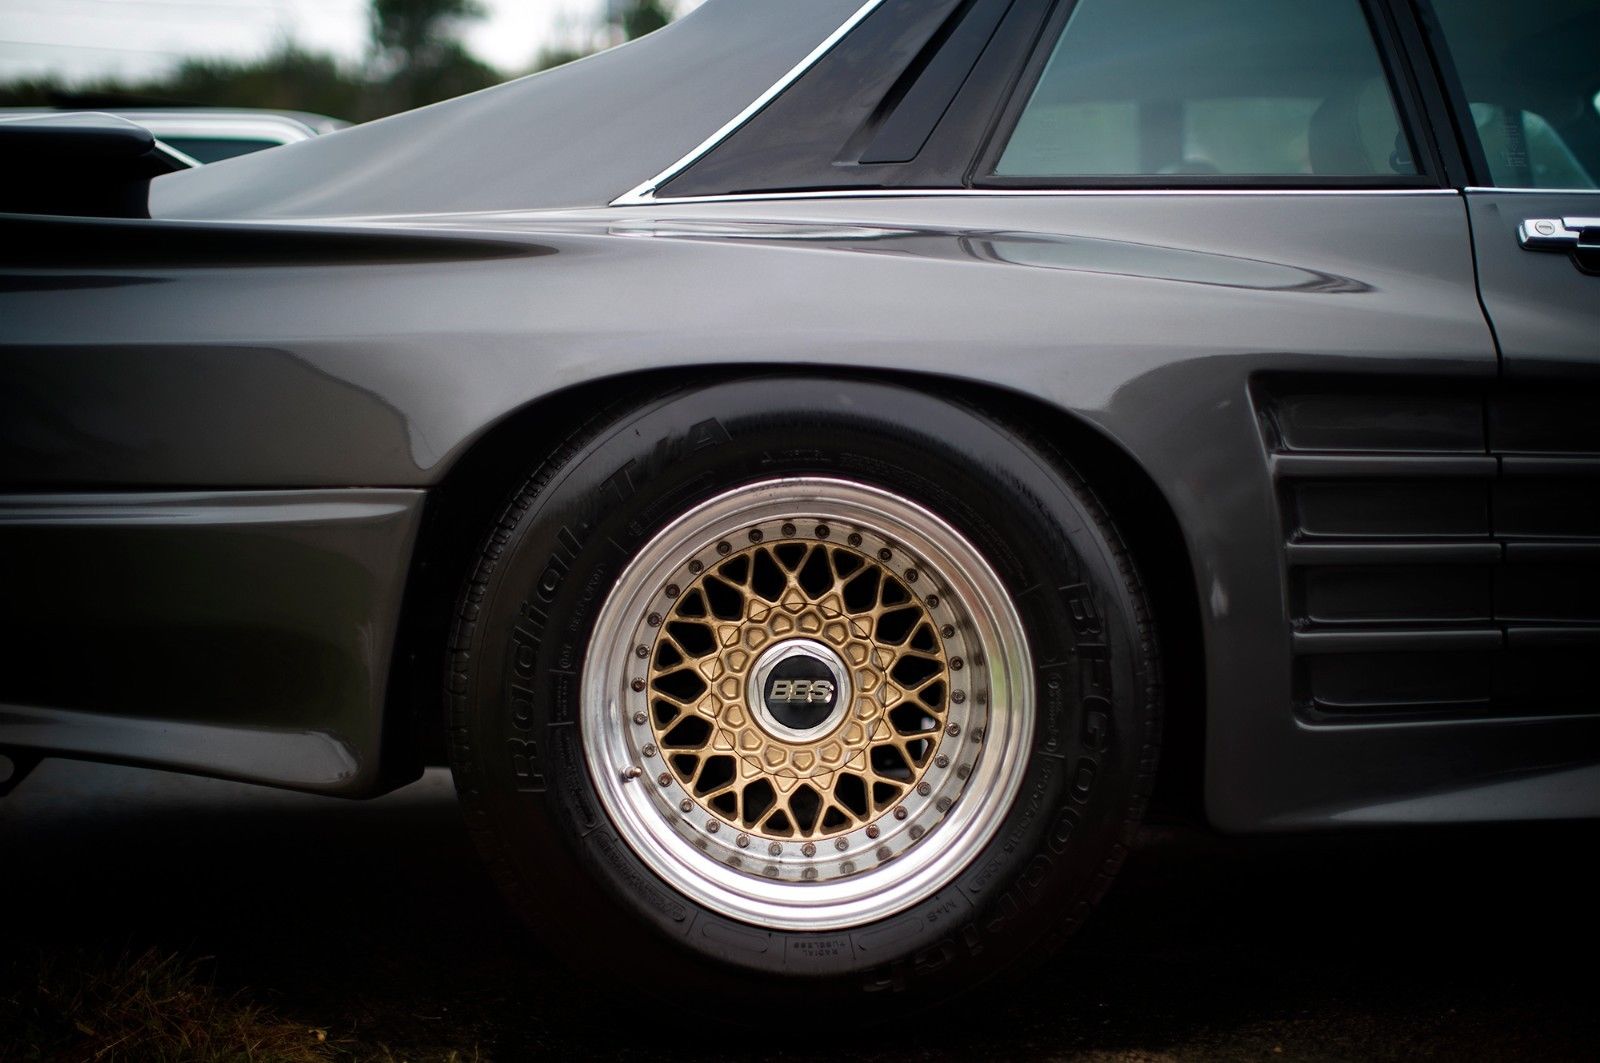 Koenig Specials Jaguar on BBS wheels